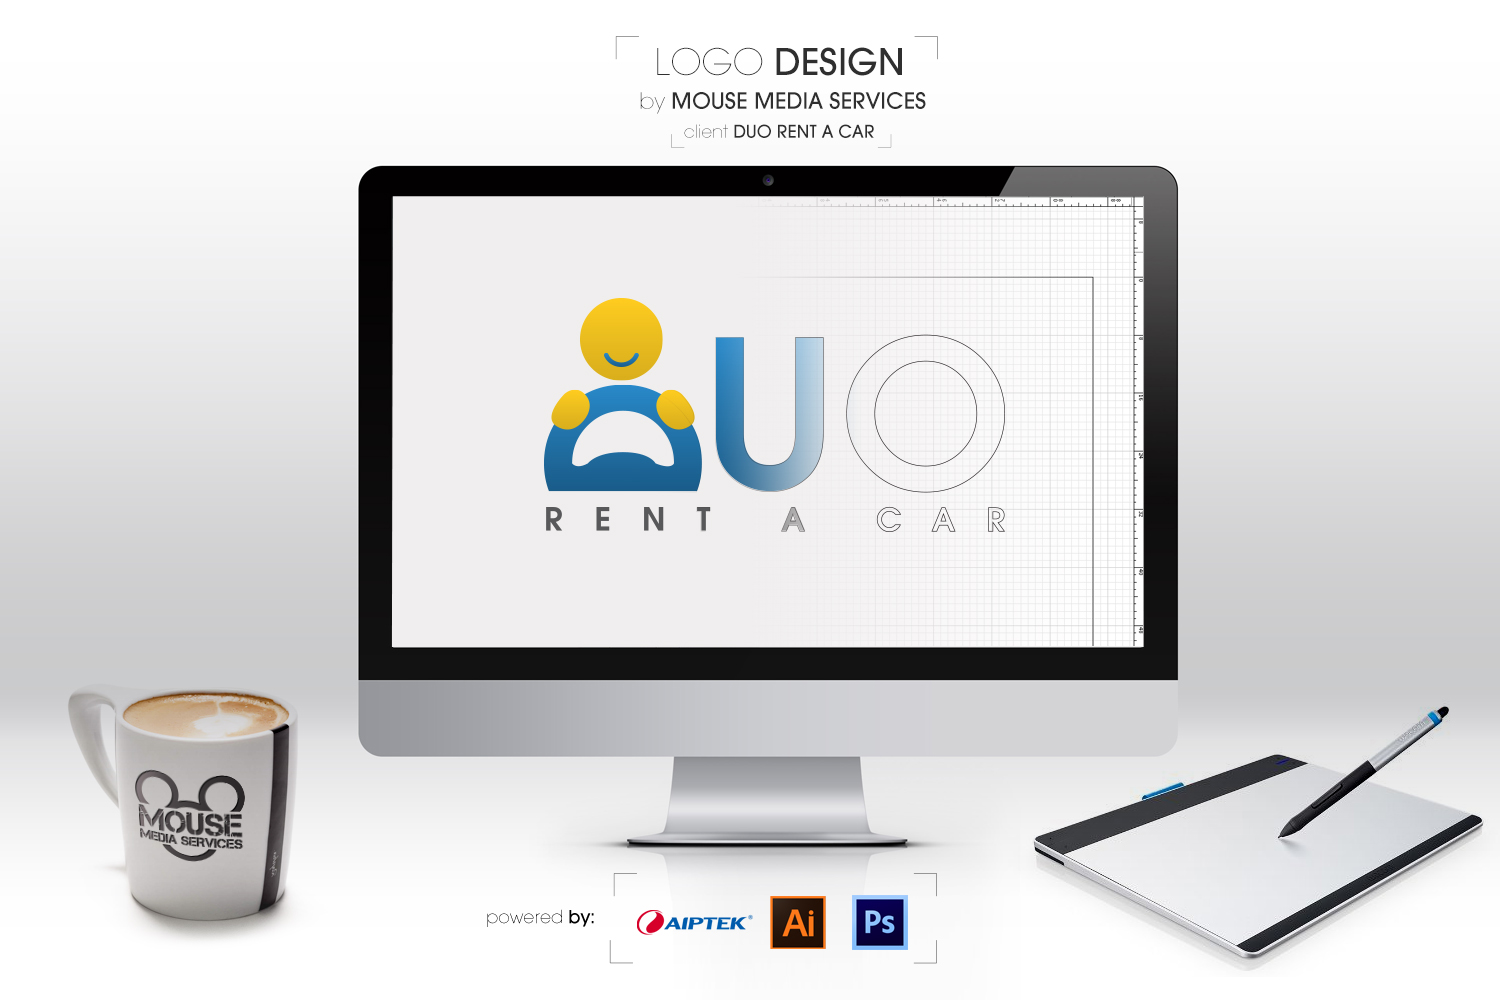 pjvbg_logo design Duo rent a car.jpg